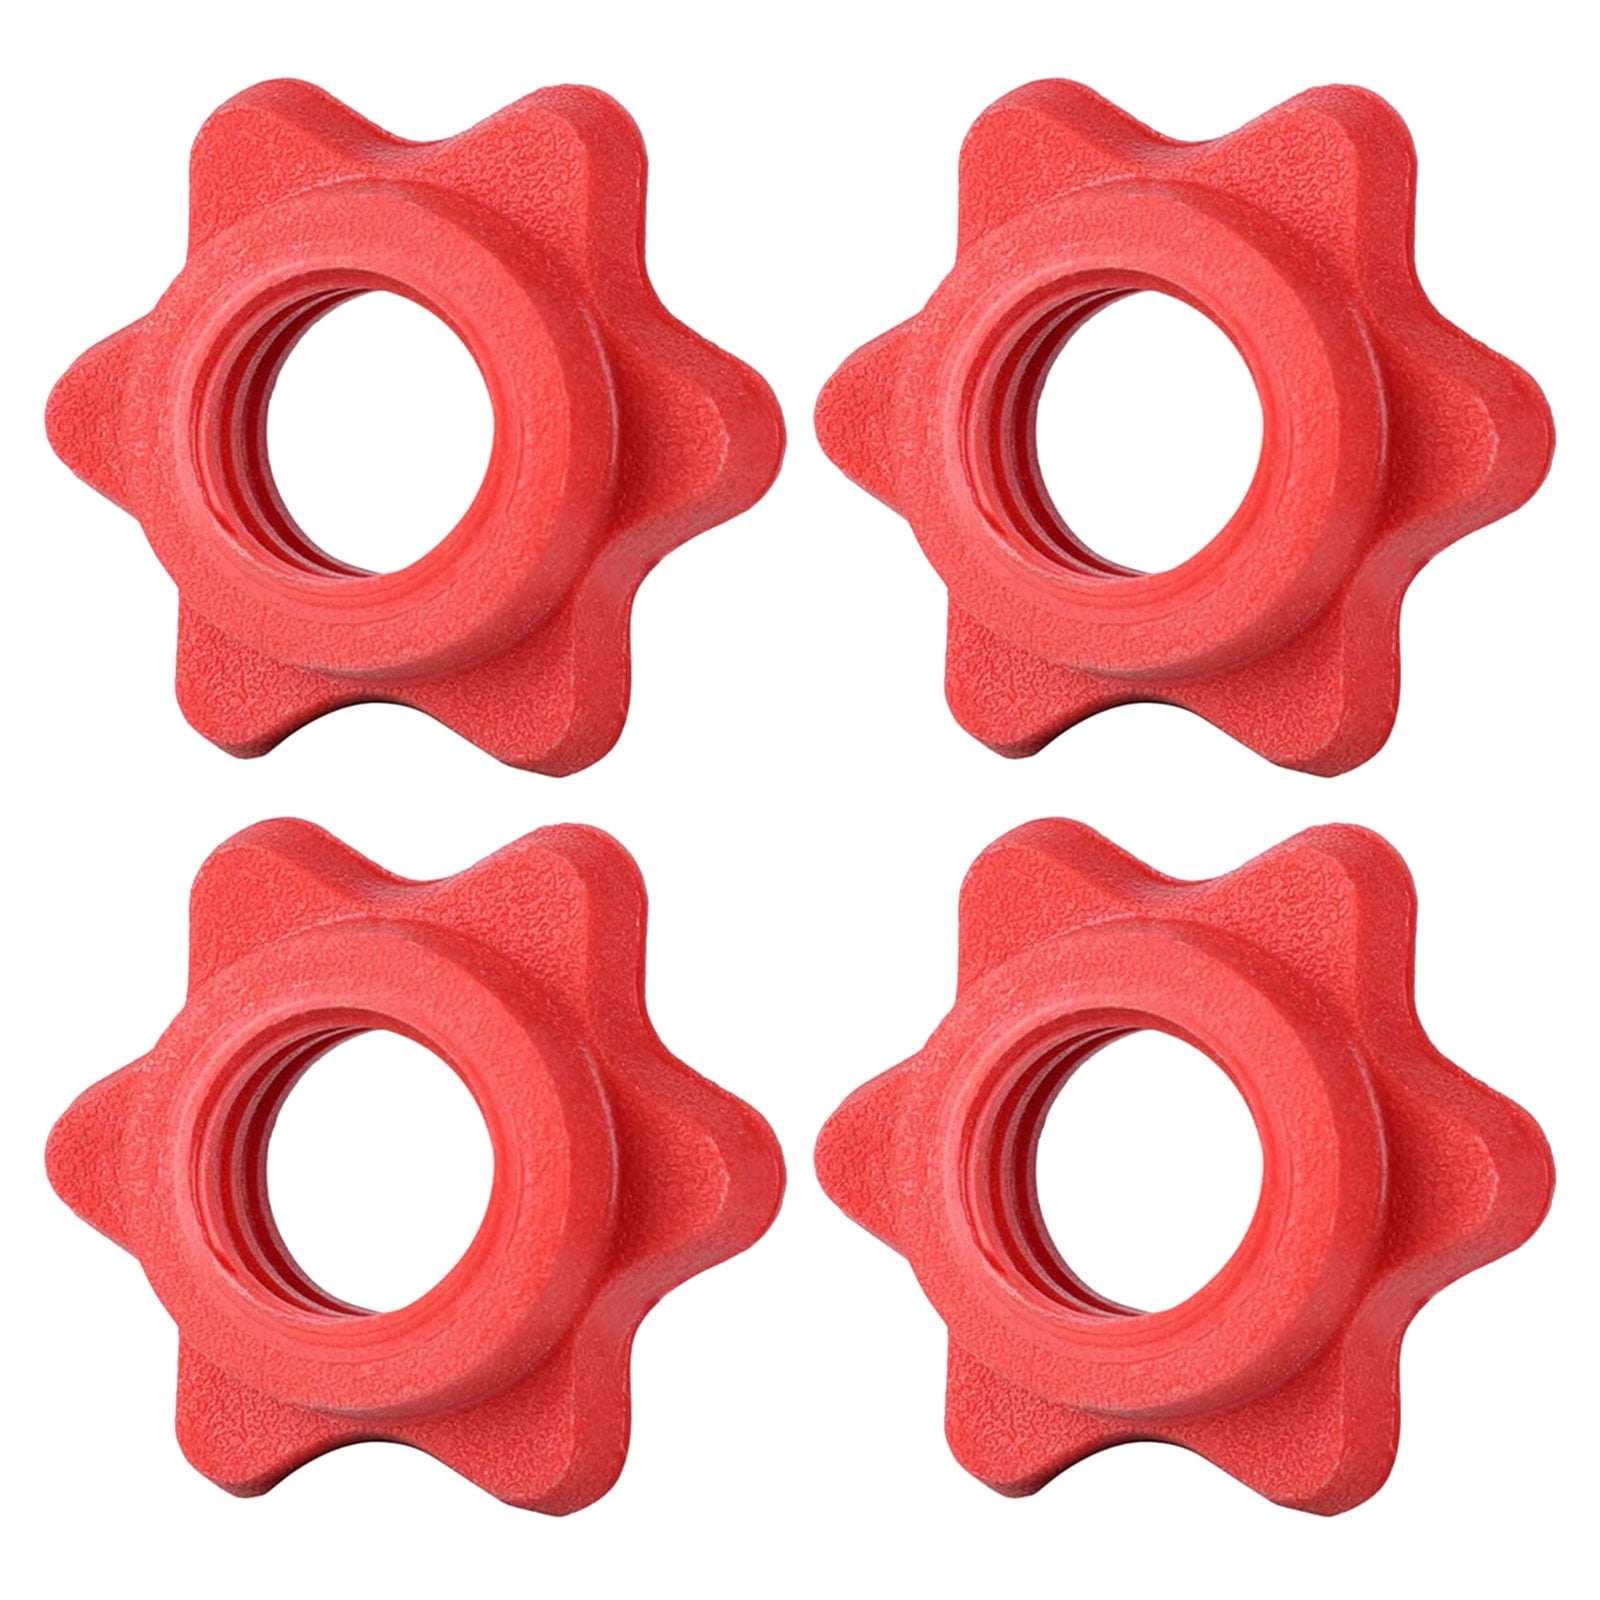 4pcs 1Inch/25mm Red Plastic Dumbbell Bar Hexagonal Nut Spin-Lock Collars 